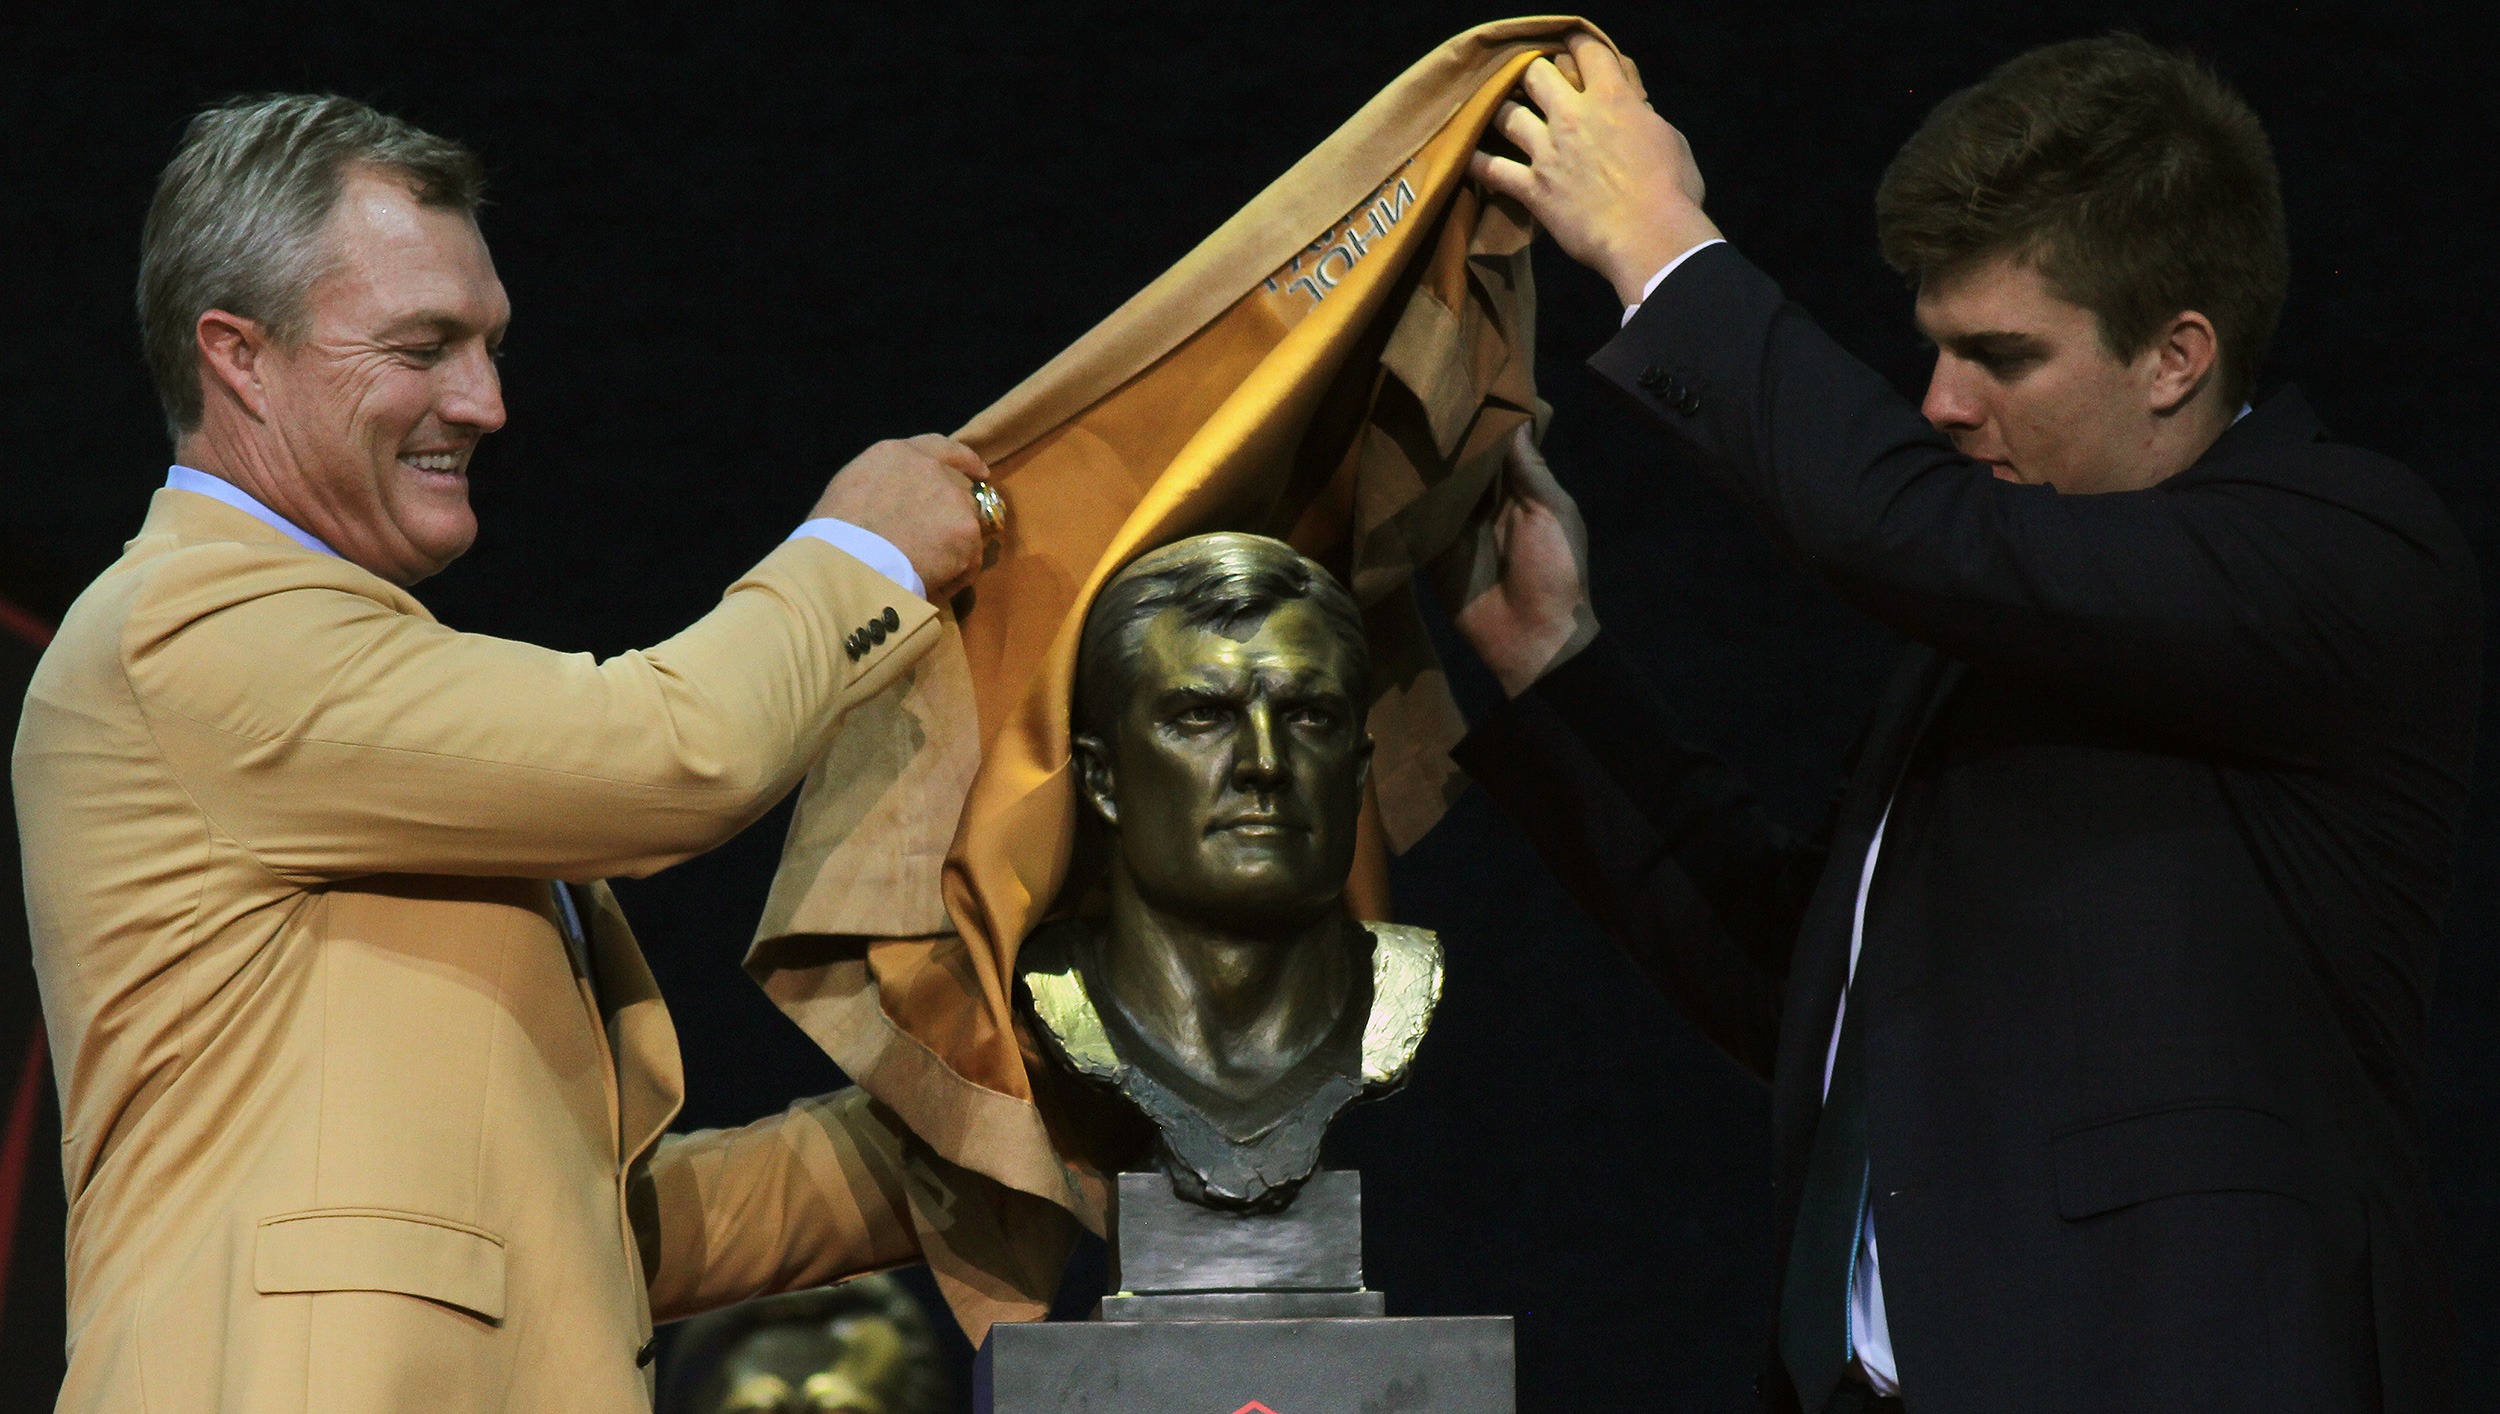 John Lynch unveils his bust